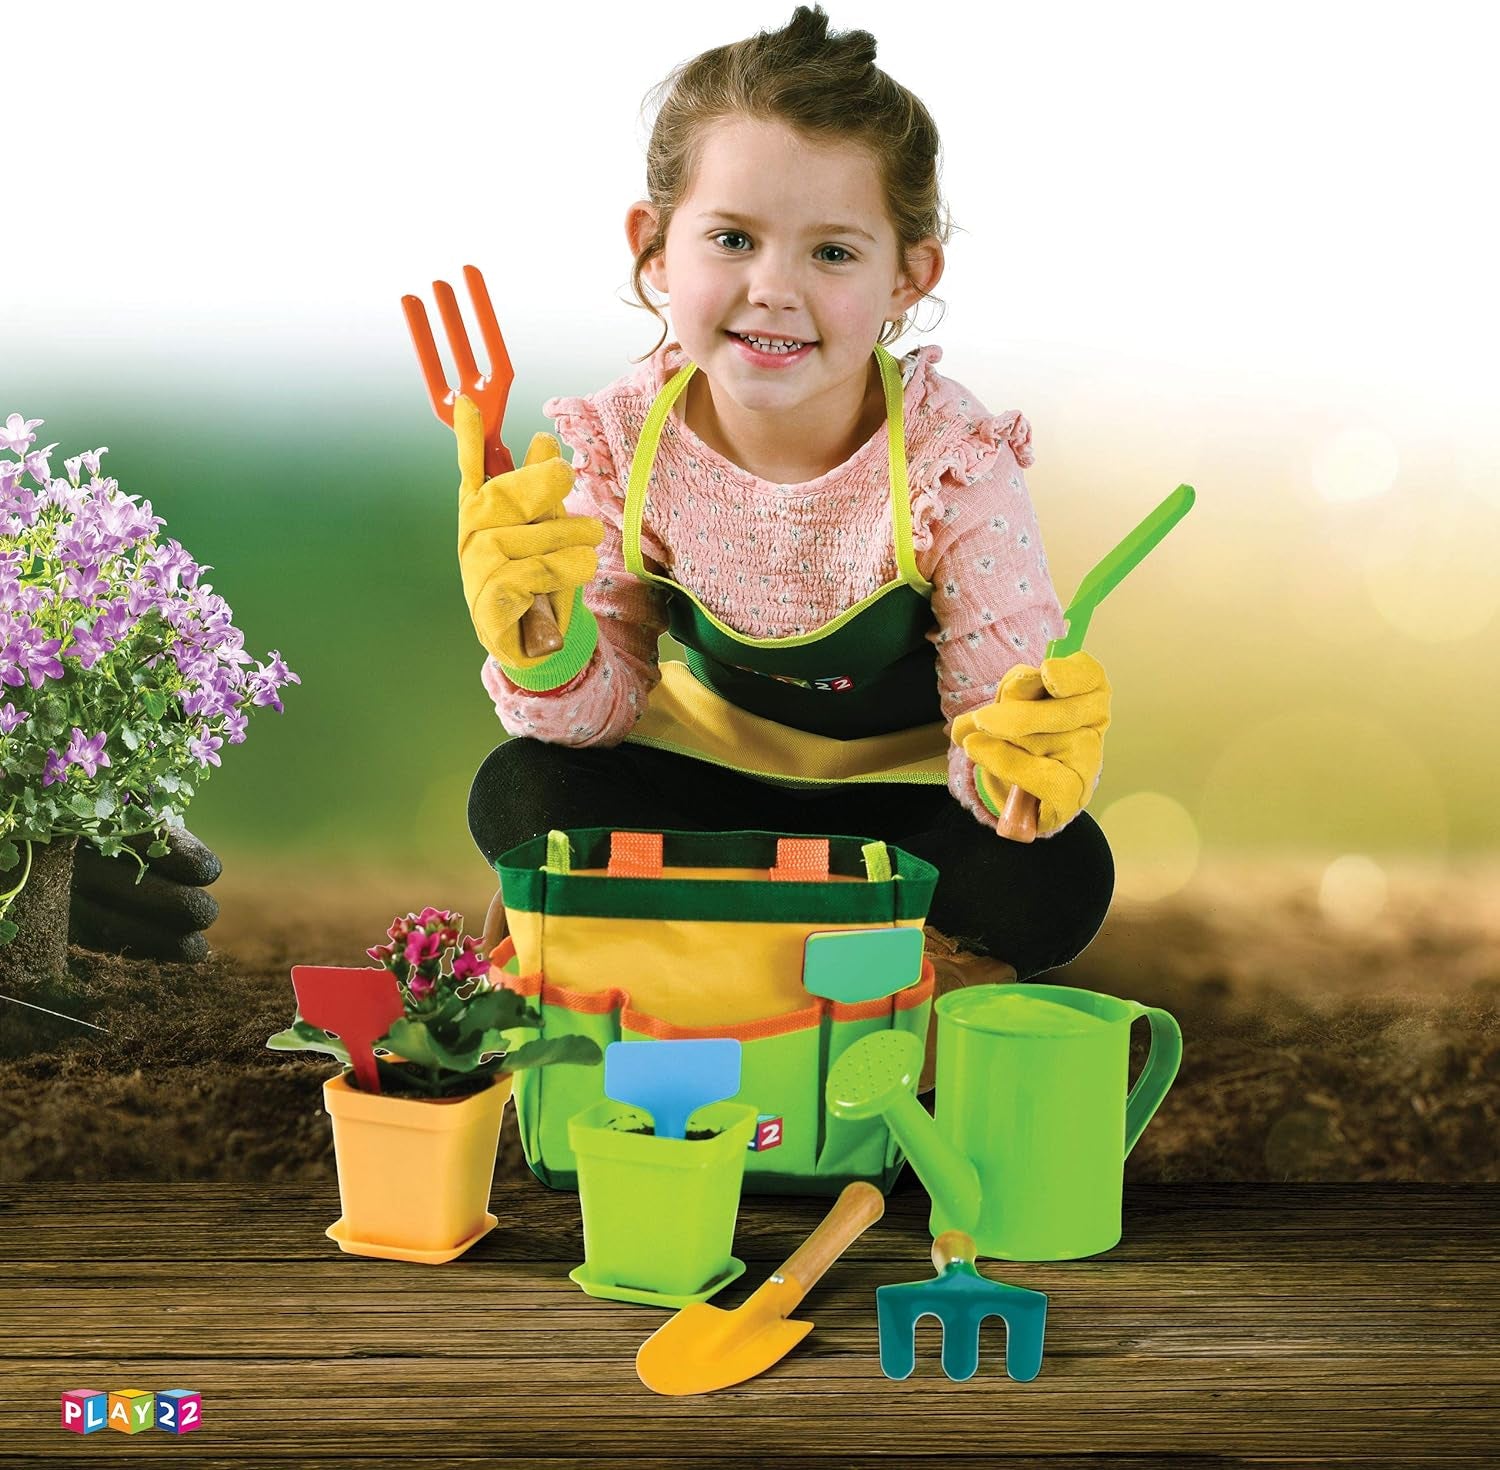 Kids Gardening Tool Set 12 PCS - Kids Gardening Tools Shovel Rake Fork Trowel Apron Gloves Watering Can and Tote Bag, Toddler Gardening Tools for Kids Best Outdoor Toys Gift for Boys and Girls